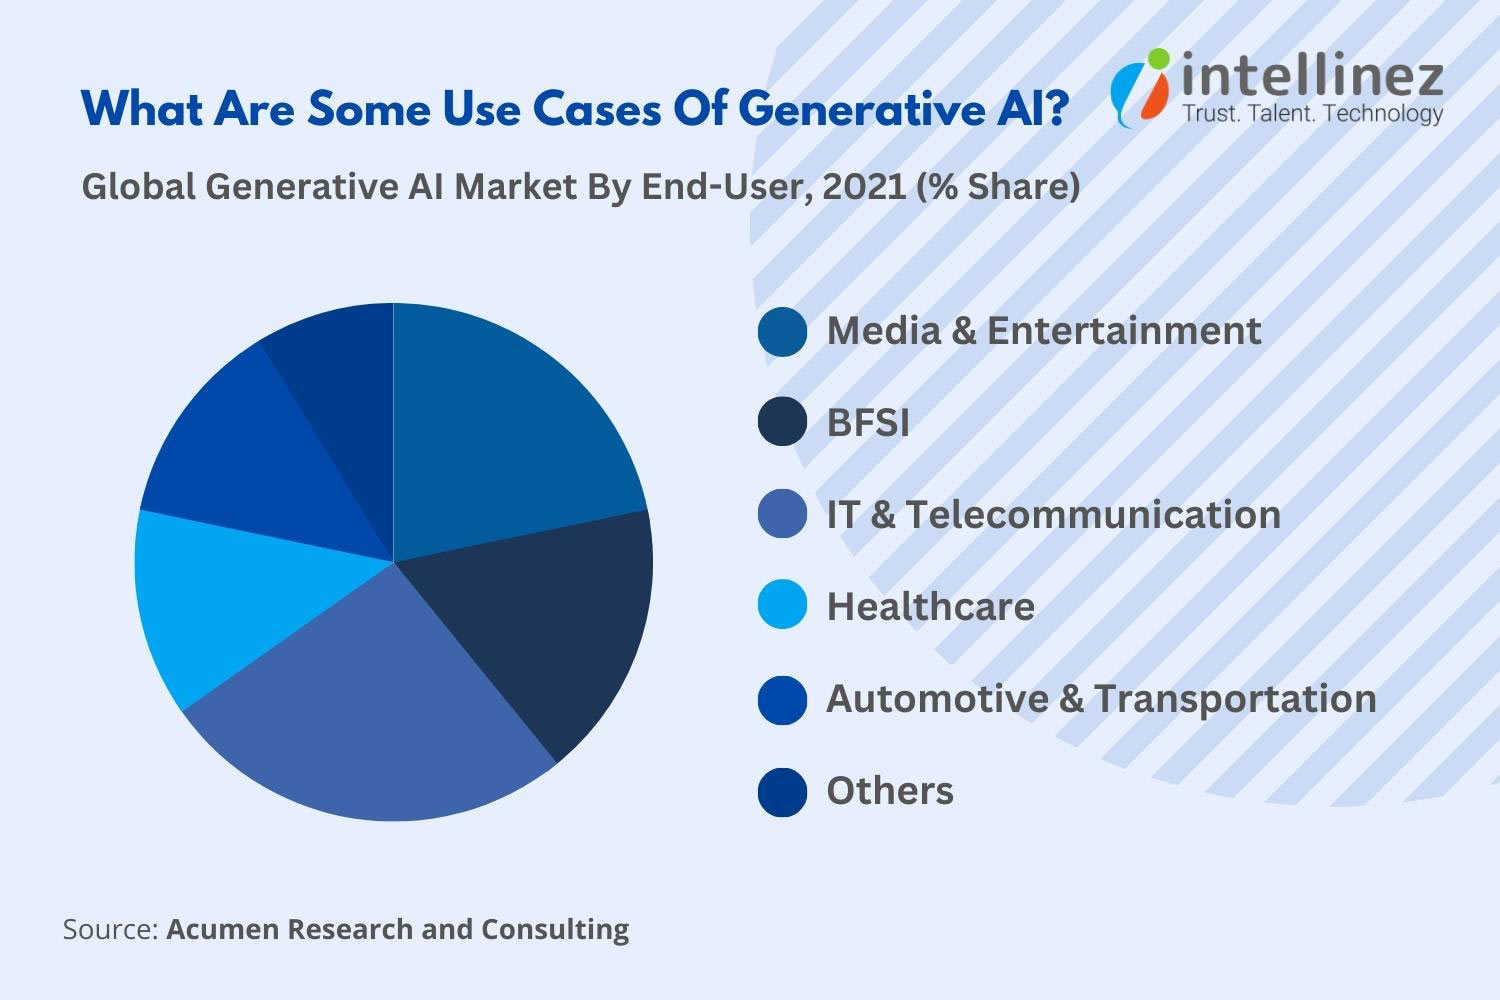 Benefits of Generative AI